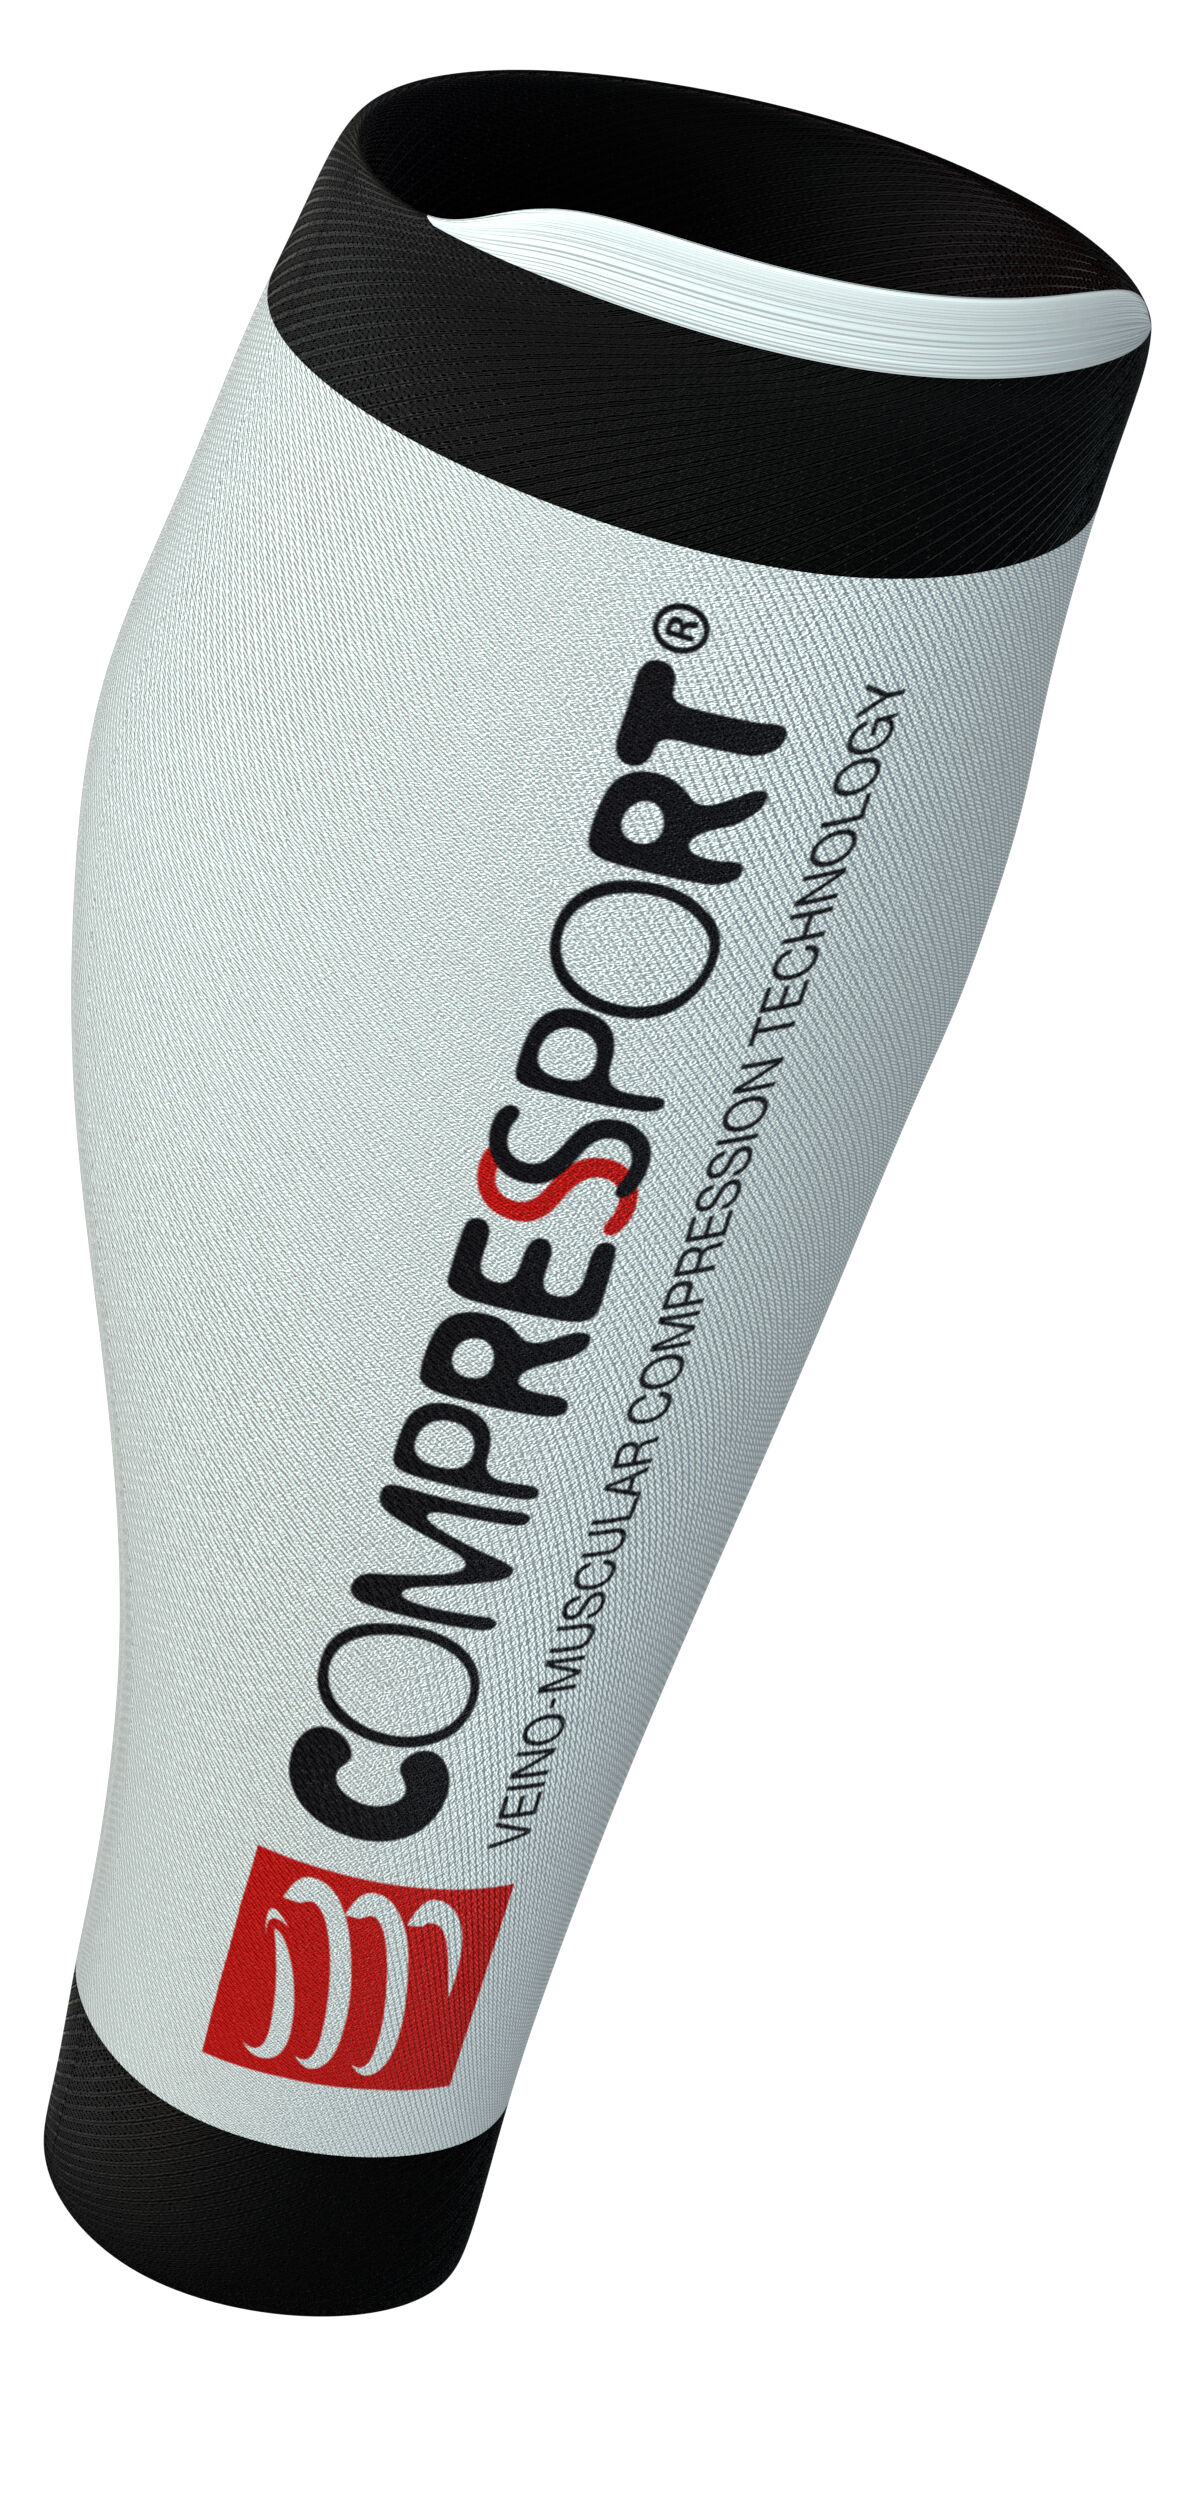 Compressport - R2 v2 - Compression socks